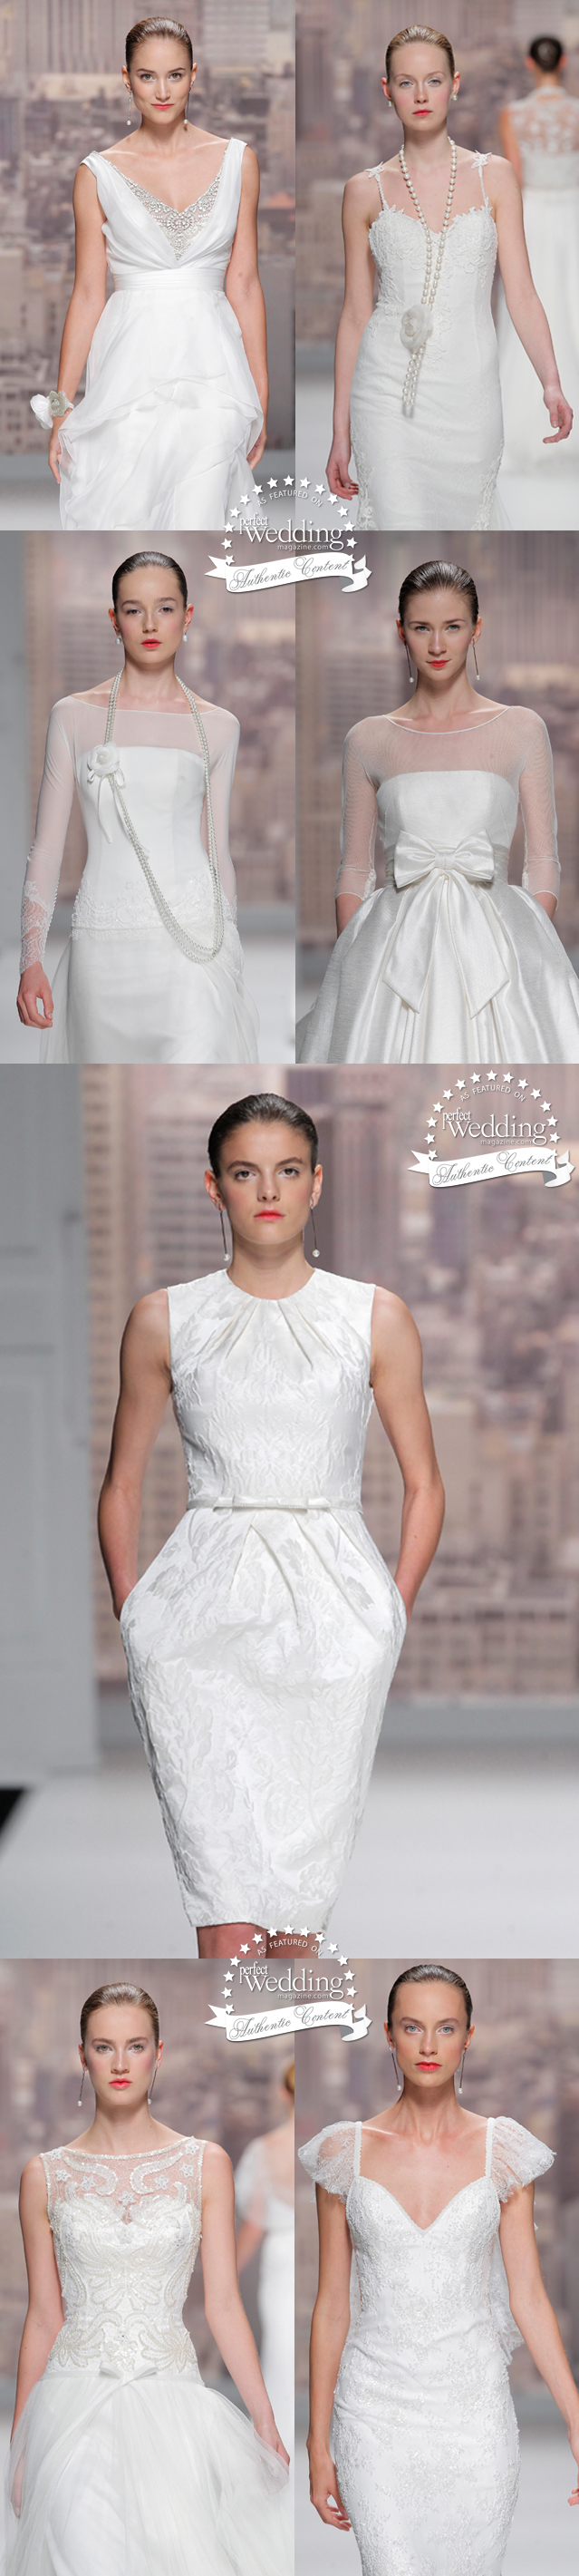 Rosa Clara, Barcelina Bridal Week, 2015 Bridal collections, Perfect Wedding Magazine, Perfect Wedding Blog